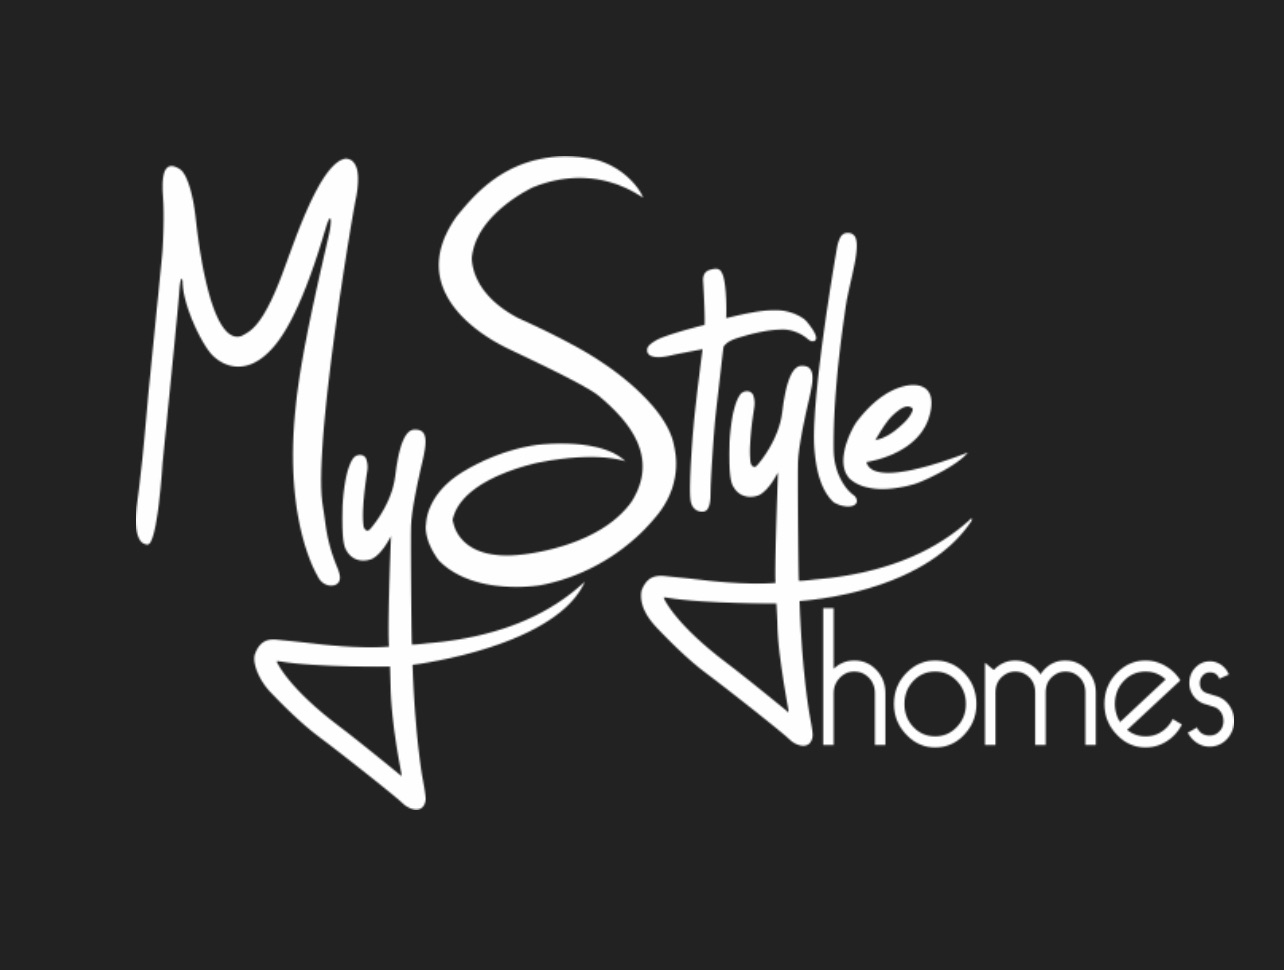 My Styles homes logo